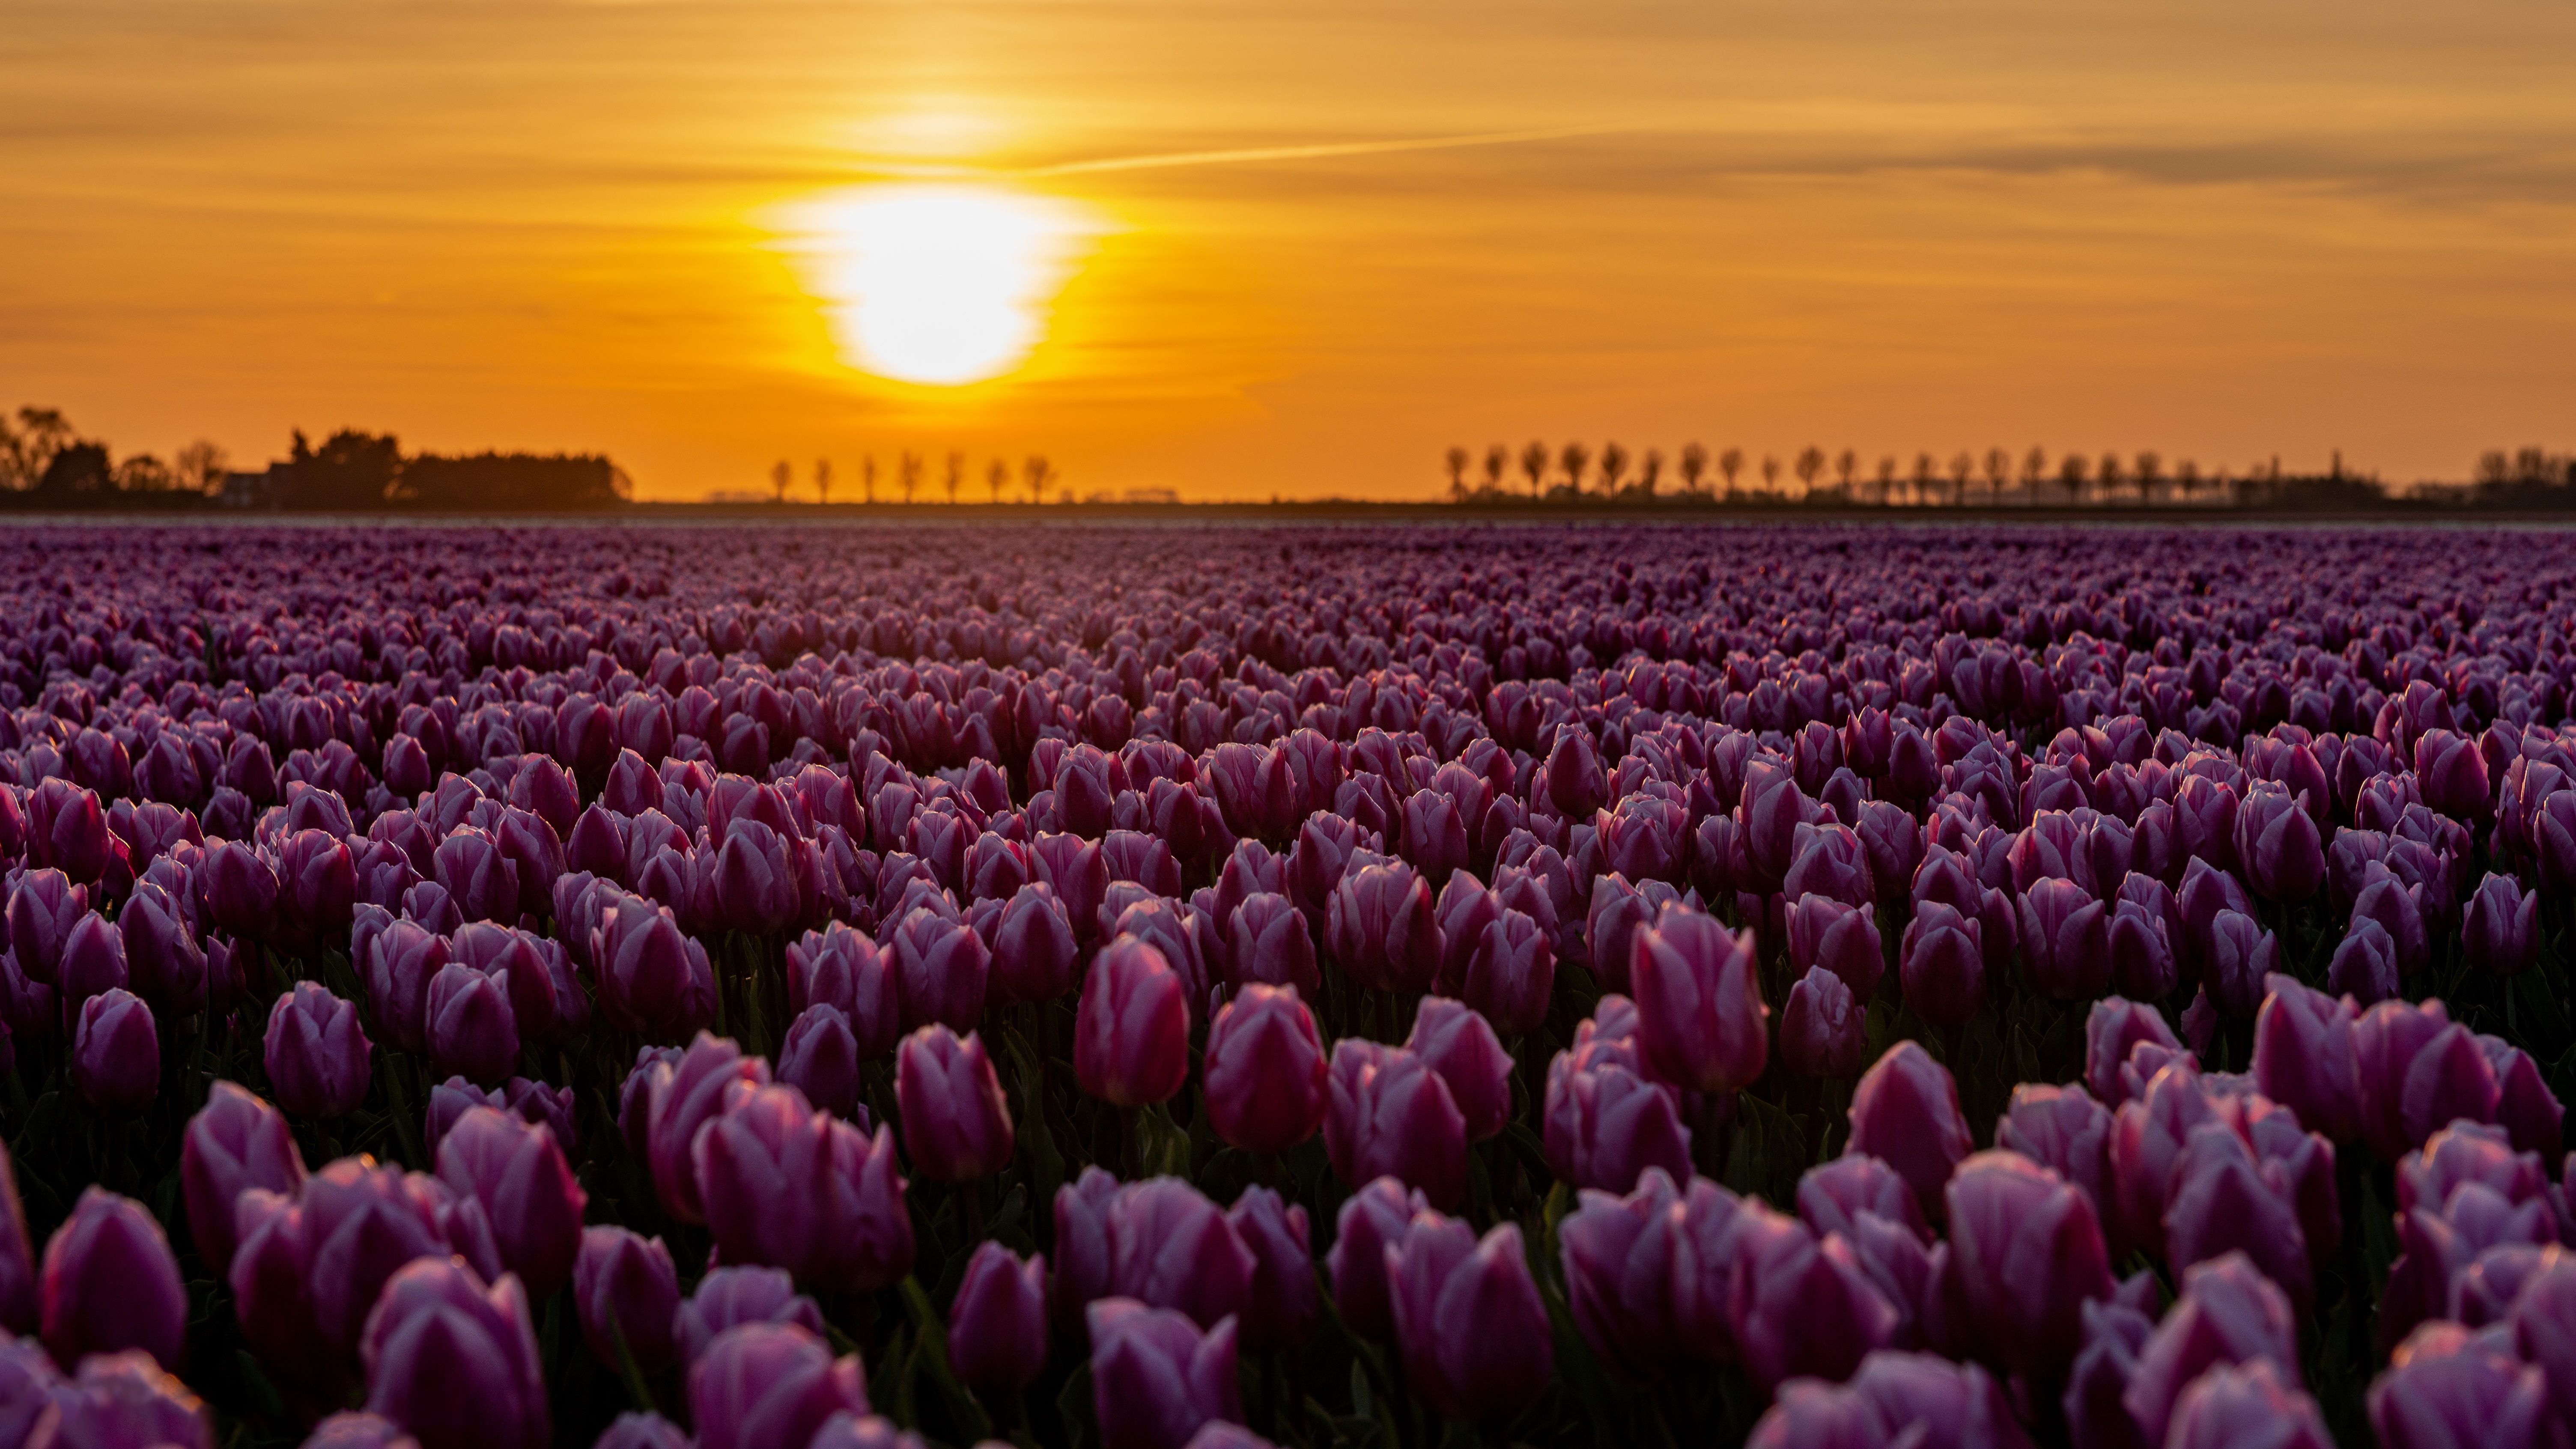 A field of purple tulips at sunset - Tulip